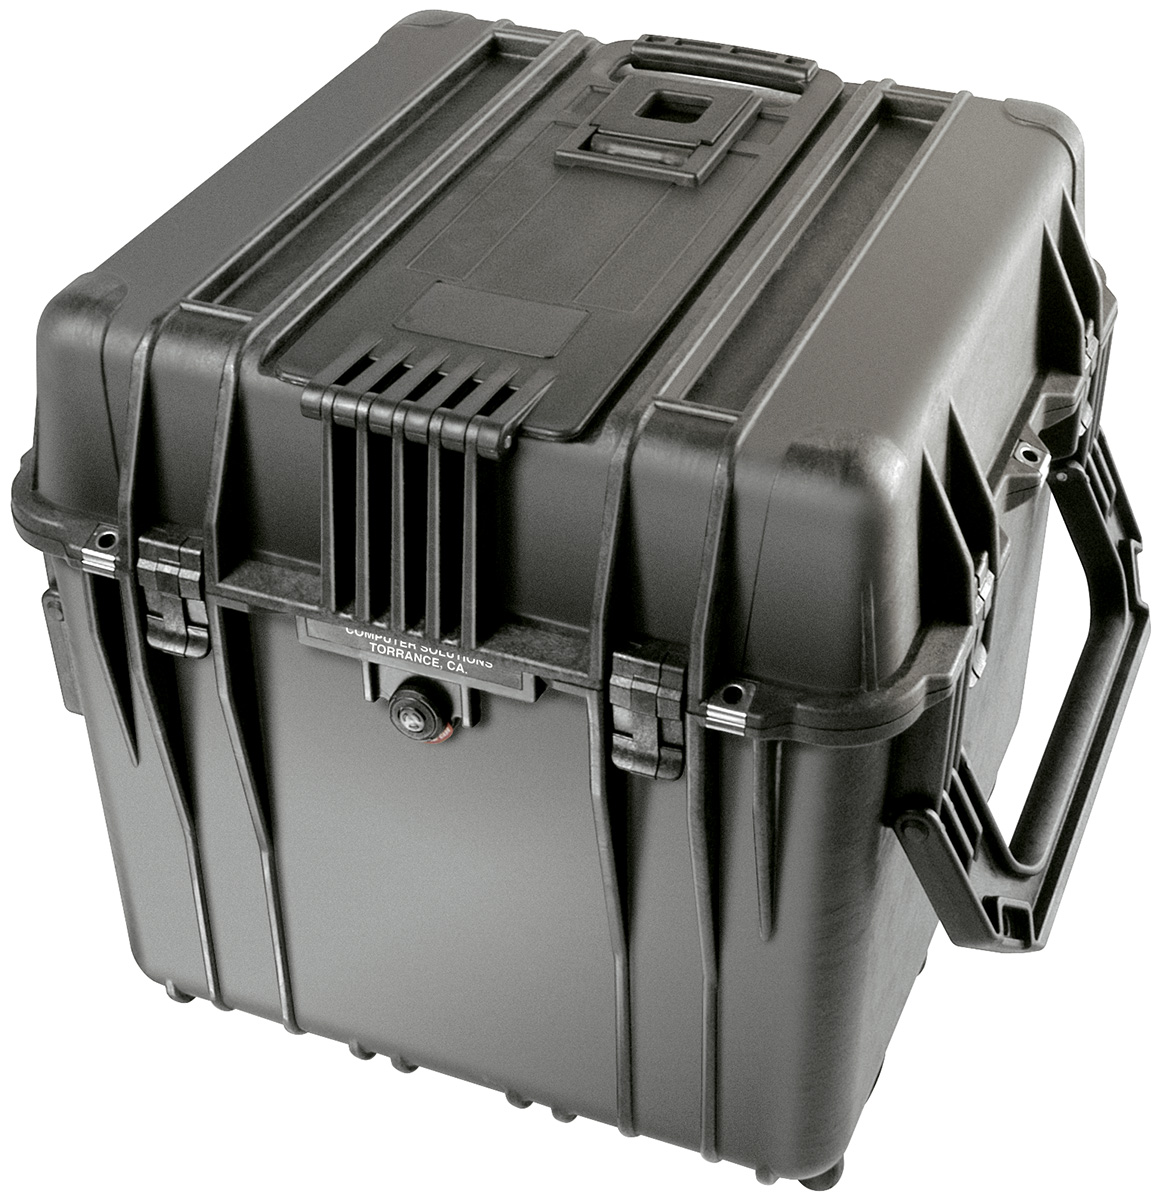 Protector Cube Case 0340 černý s pěnou